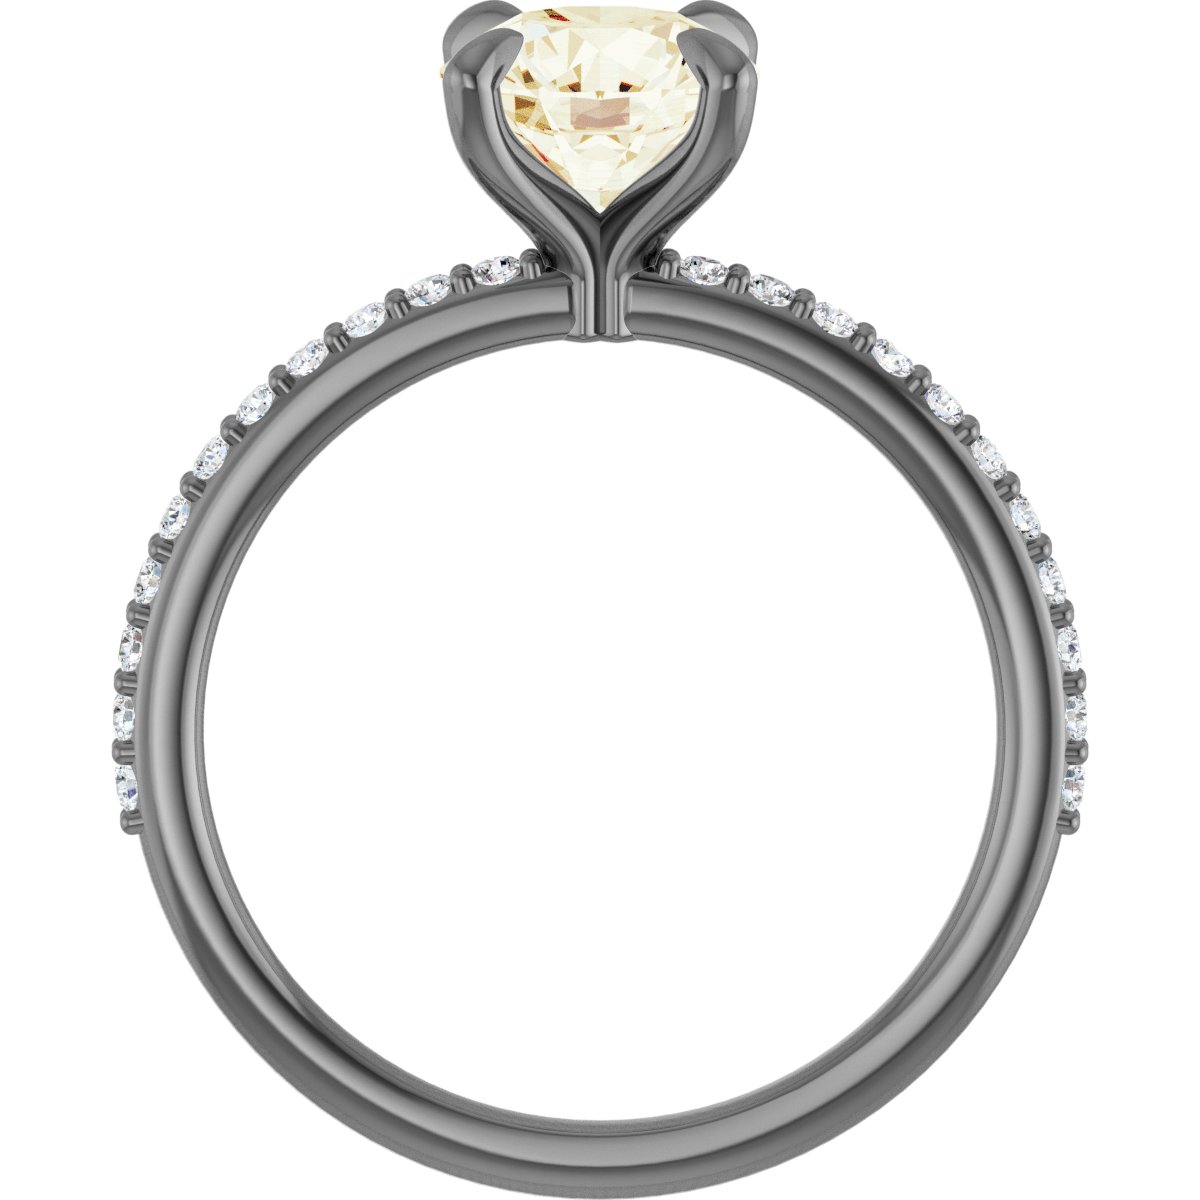 14K Yellow 7 mm Round Forever One™ Moissanite & 1/5 CTW Diamond Engagement Ring